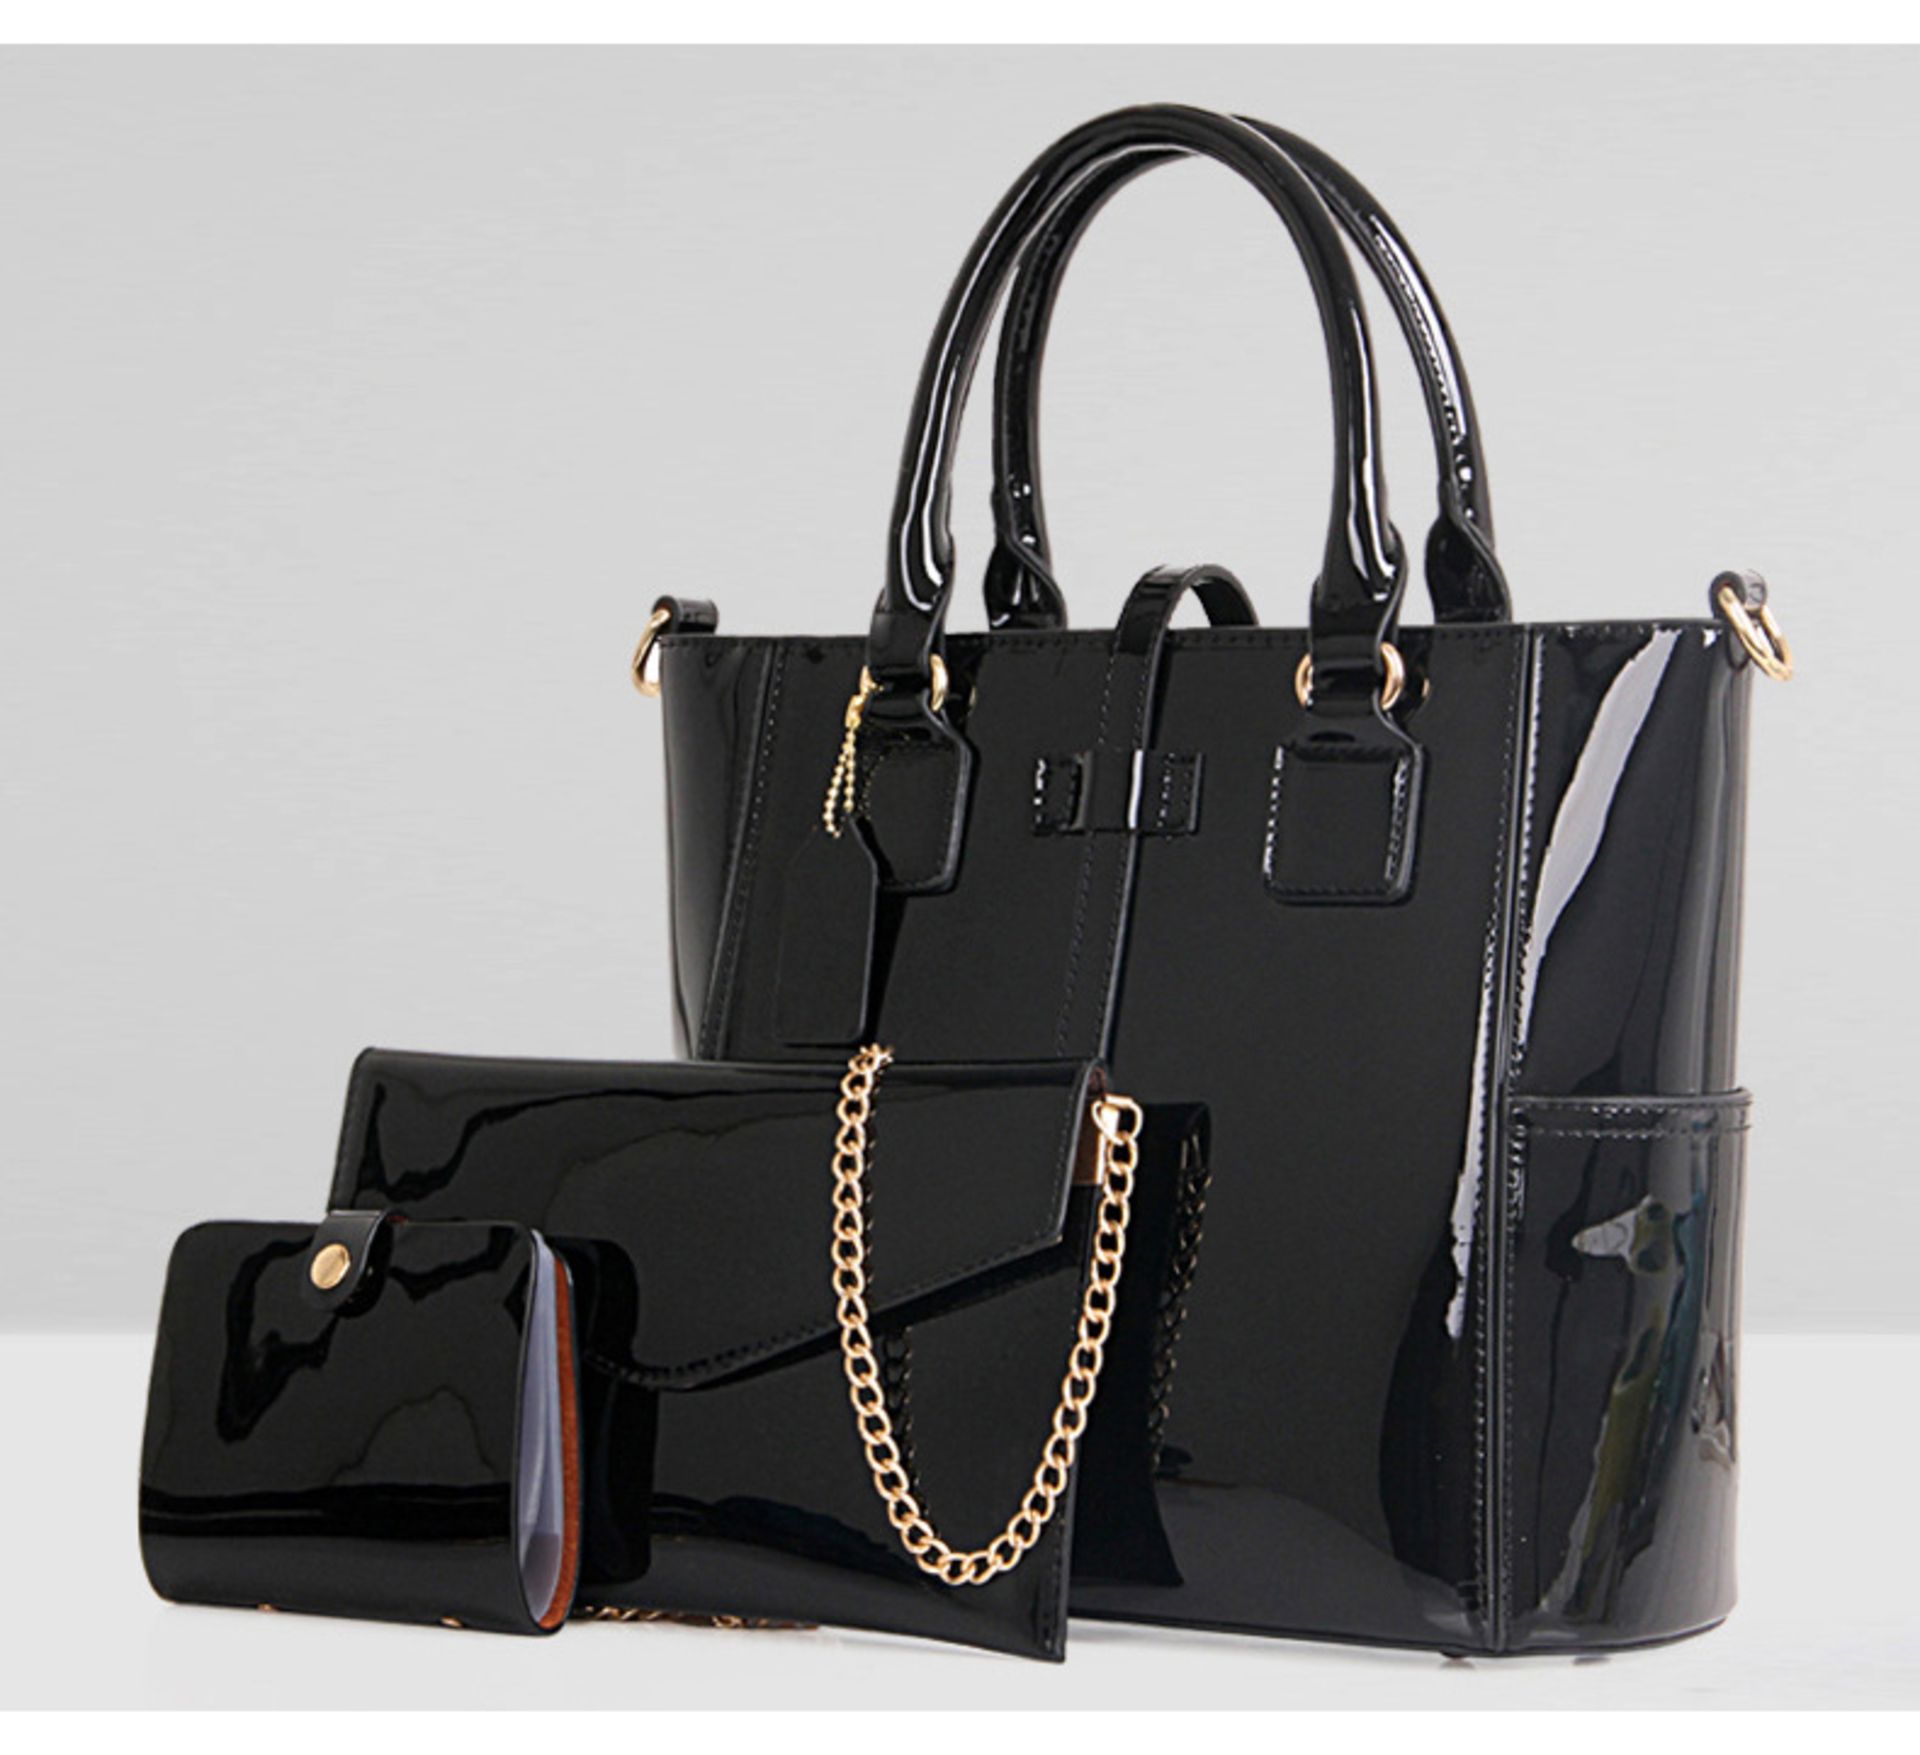 No VAT Brand New Black Three Piece Fashion Bag Set Inc Large Handbag / Clutch Evening Bag And Small